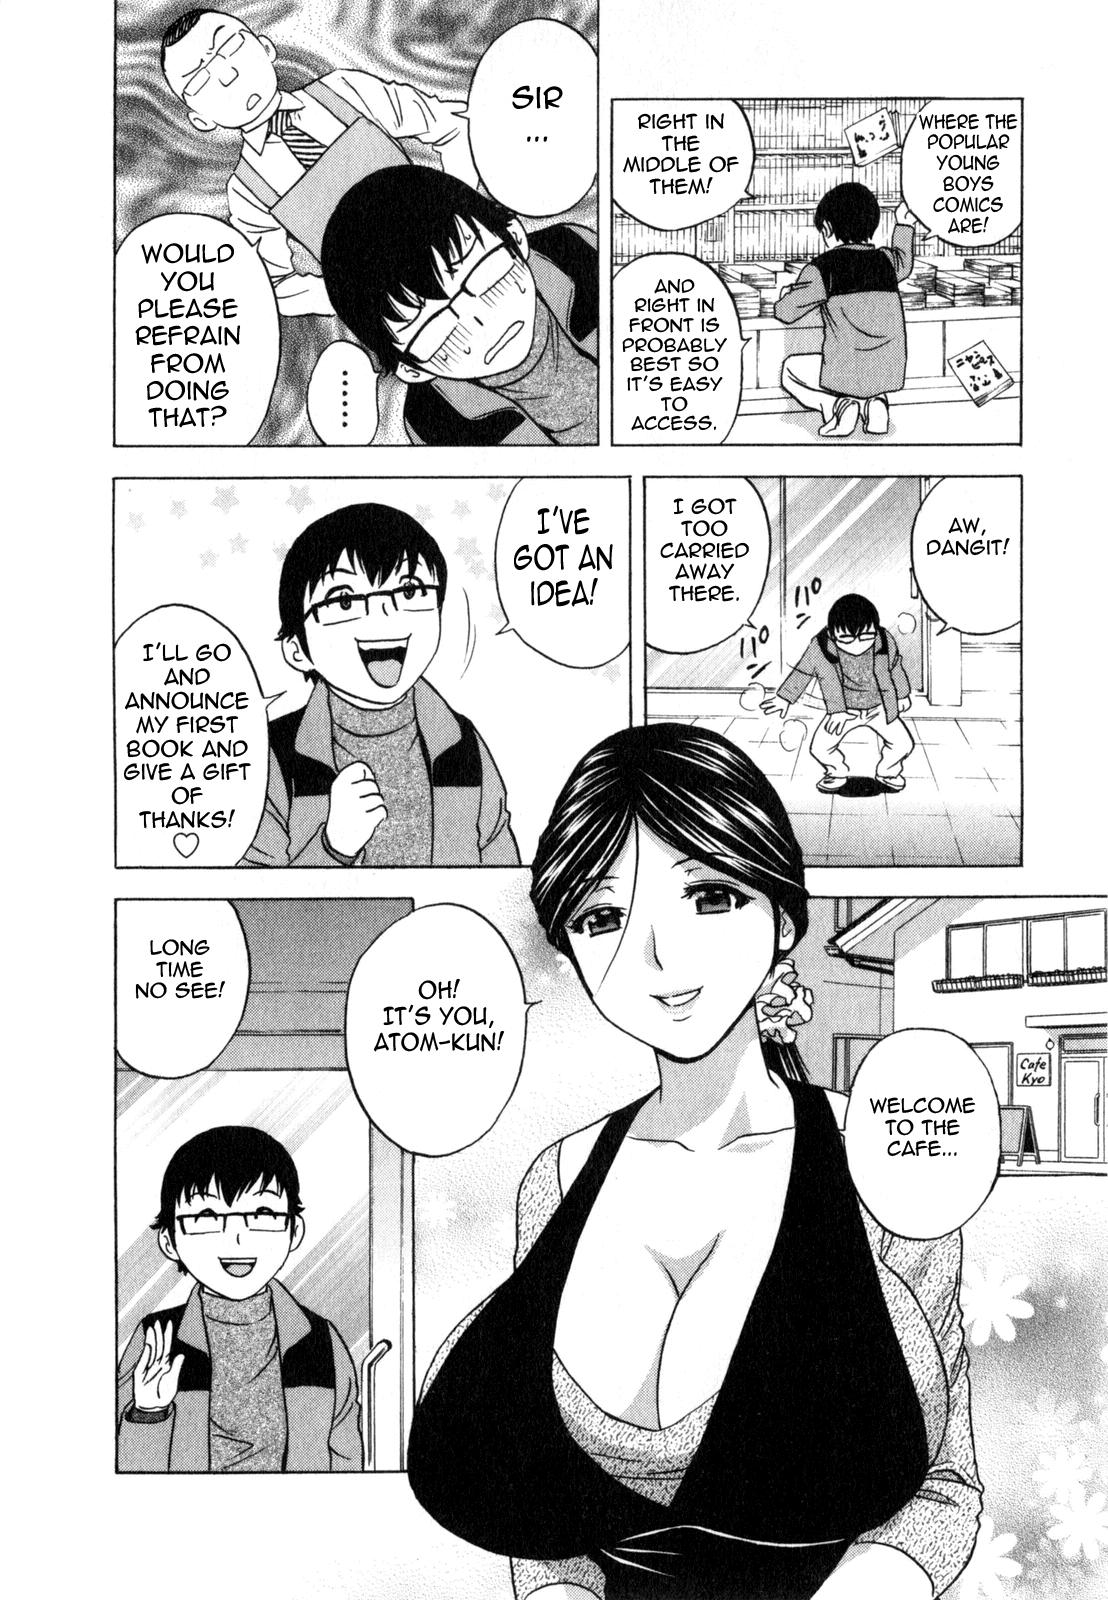 [Hidemaru] Life with Married Women Just Like a Manga 3 - Ch. 1-6 [English] {Tadanohito} 13